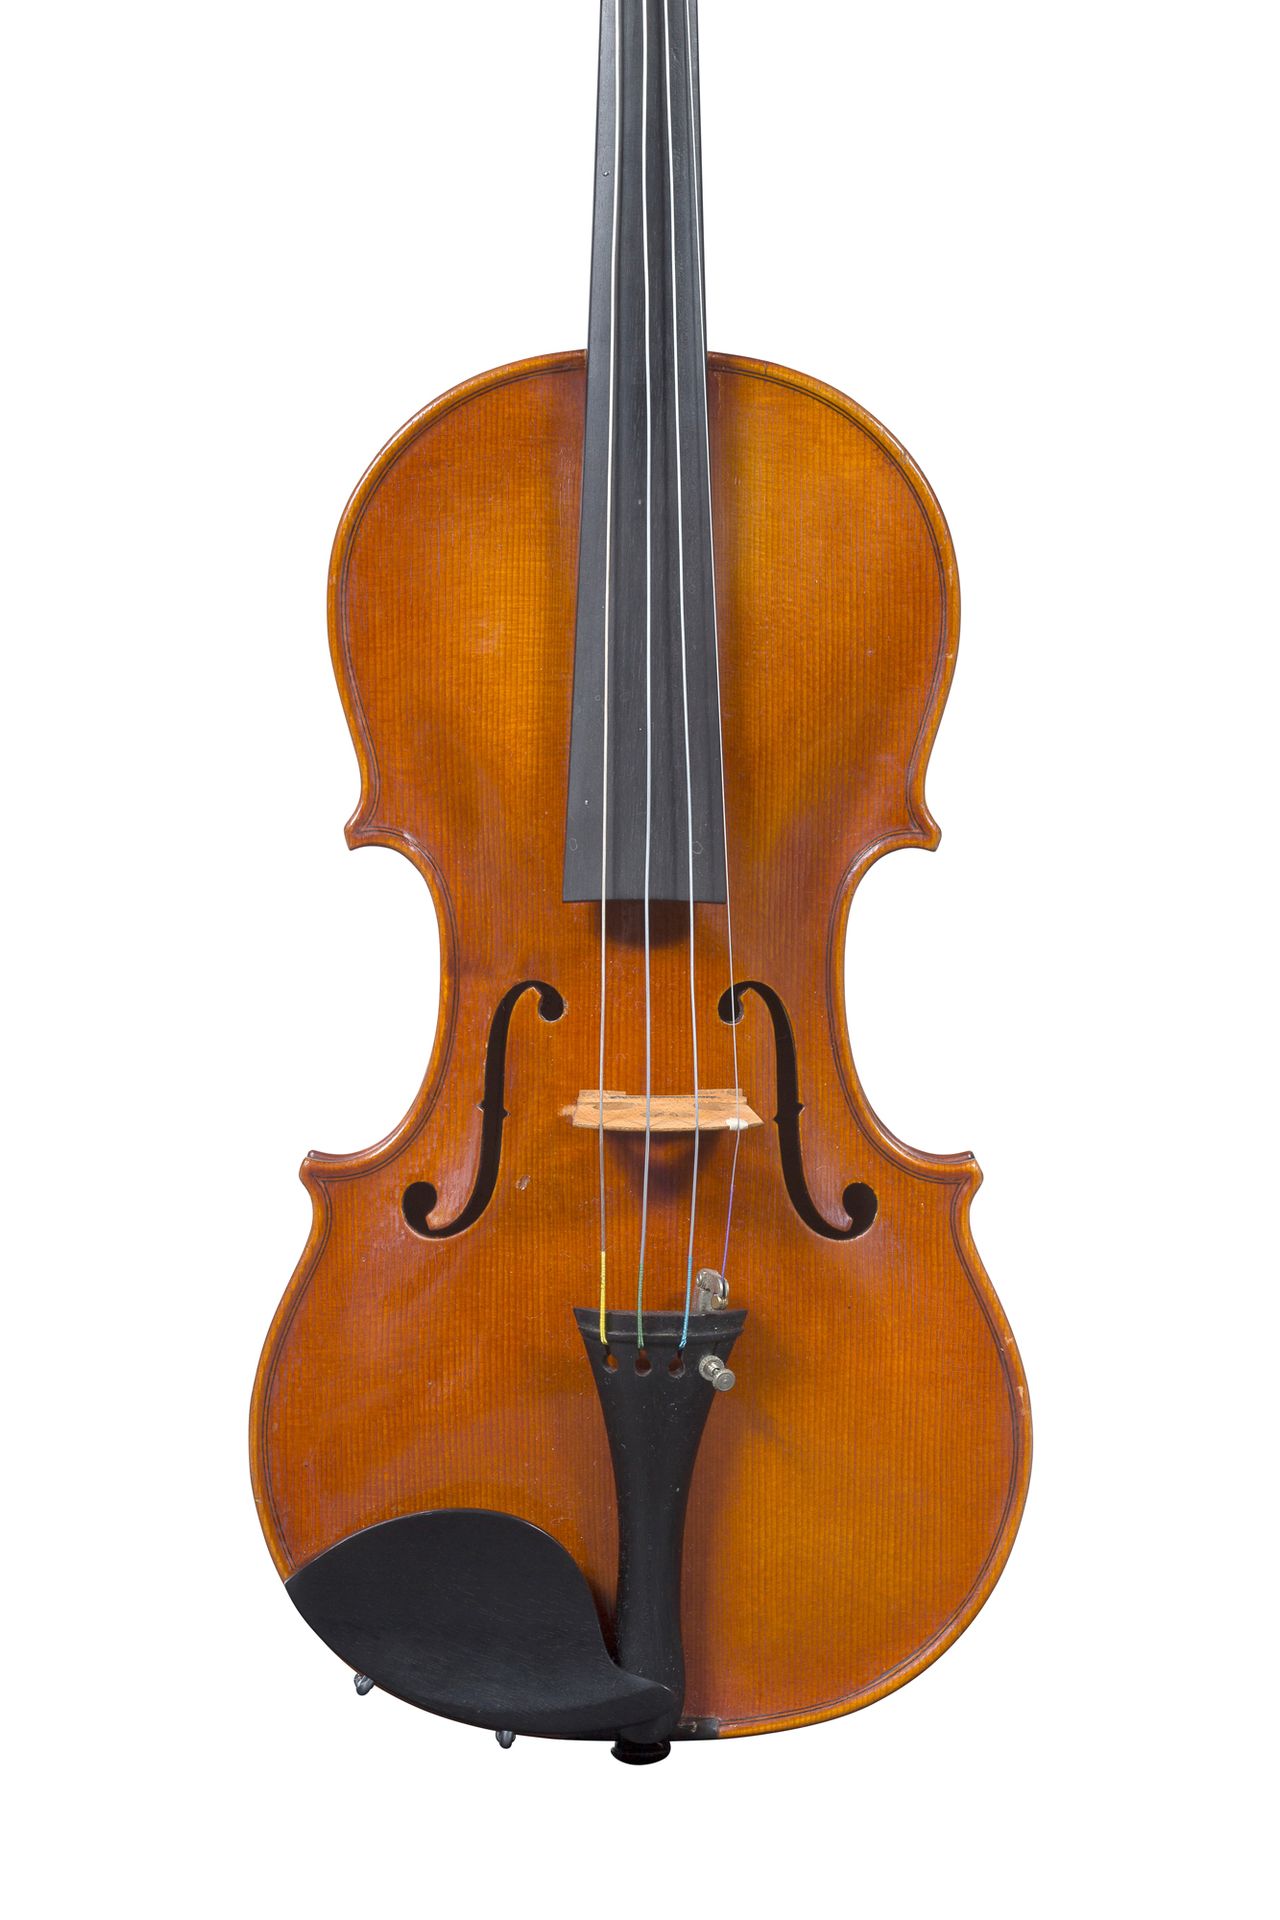 Null A French Violin, Mirecourt circa 1920-30